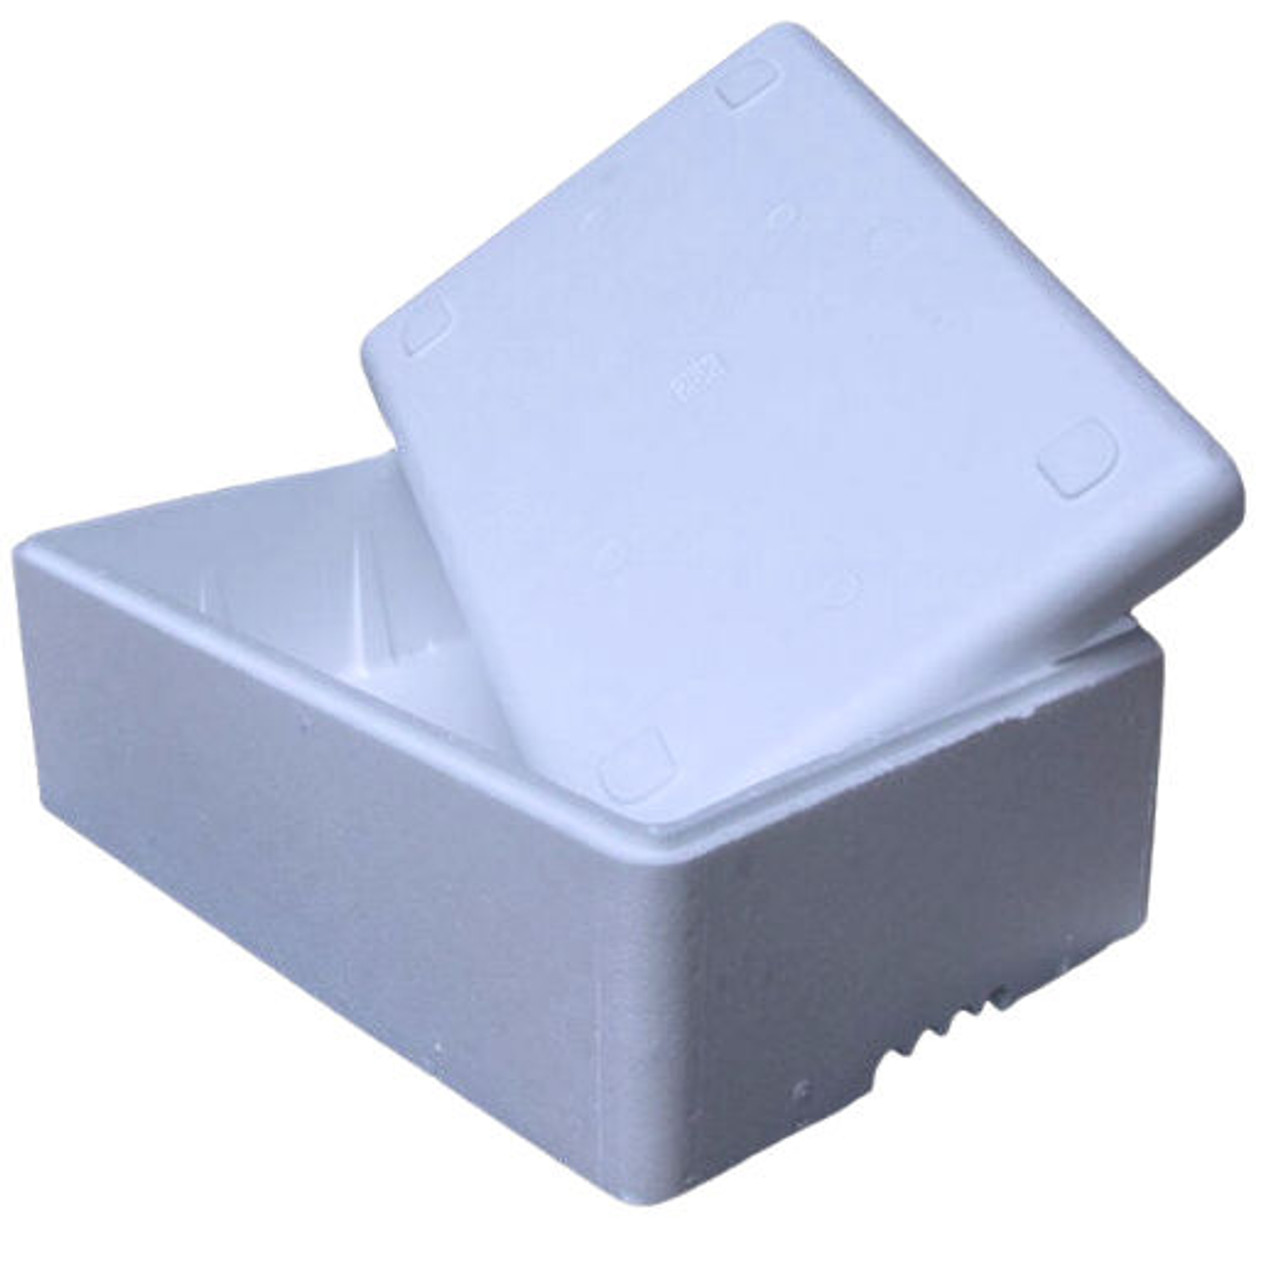 Standard 25klo polystyrene Box & Lids  (  40 boxes )